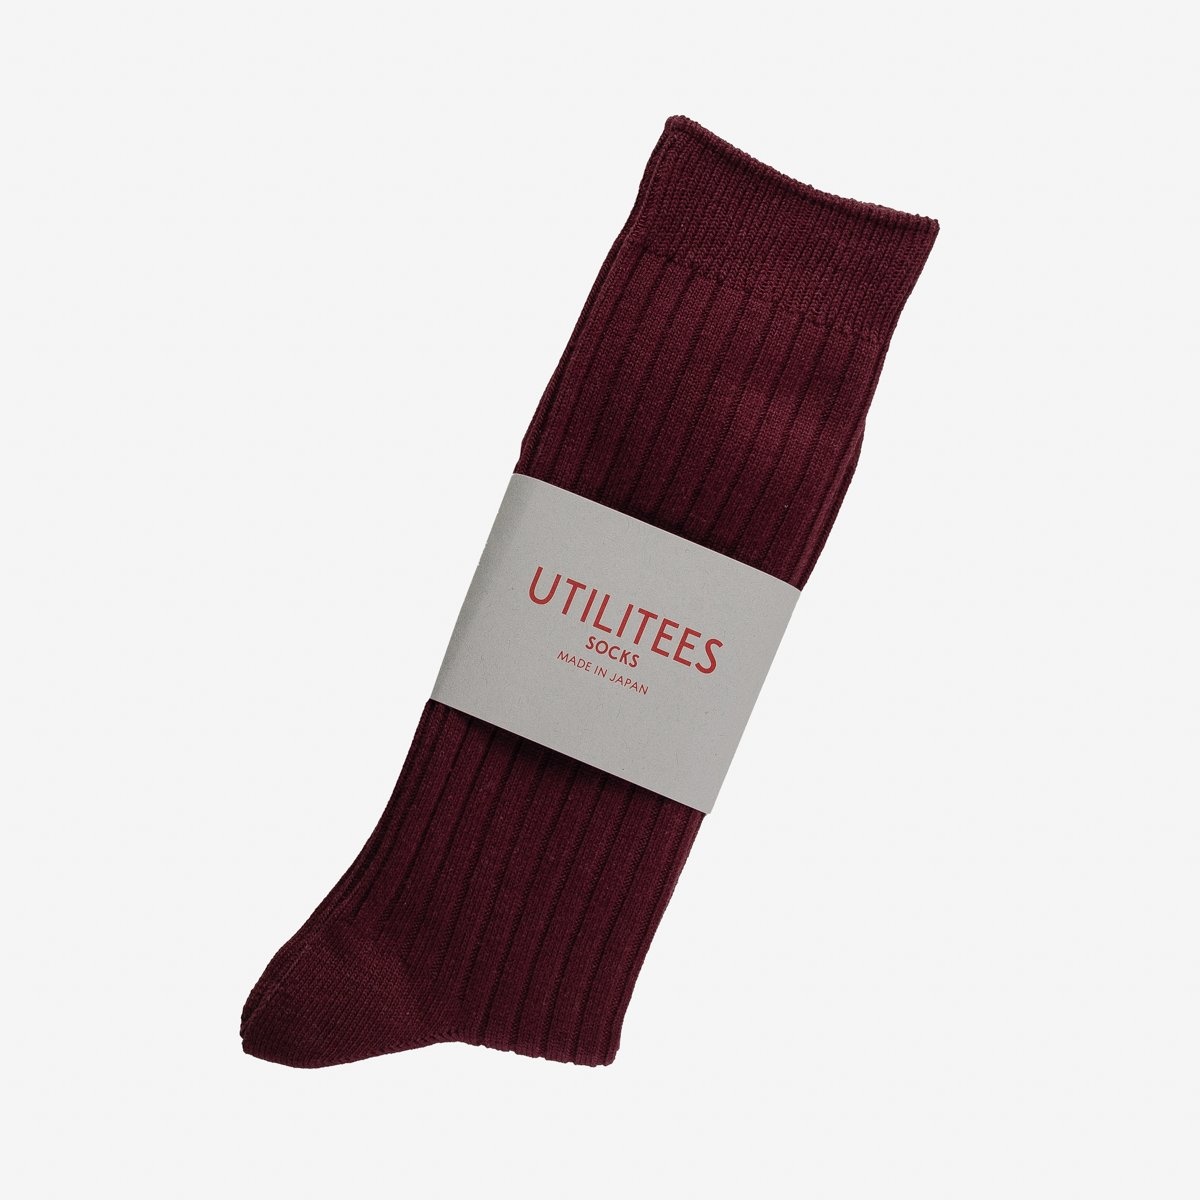 UTCS-BUR UTILITEES Mixed Cotton Crew Socks - Burgundy - 2